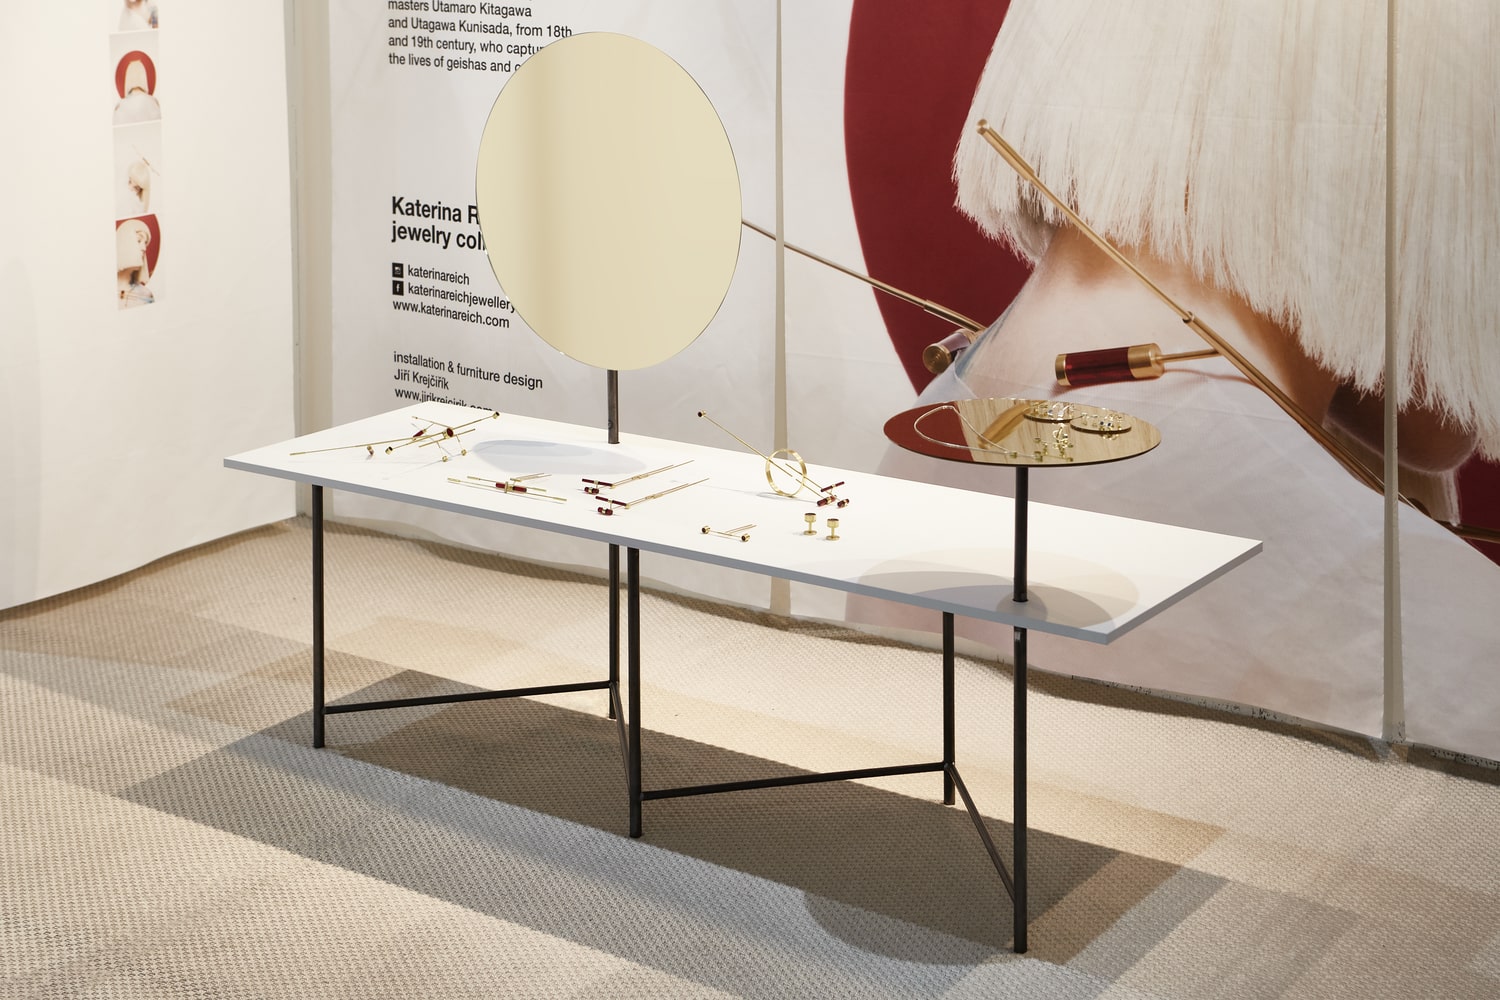 The Kyō Jewelry collection at Designblok 2018